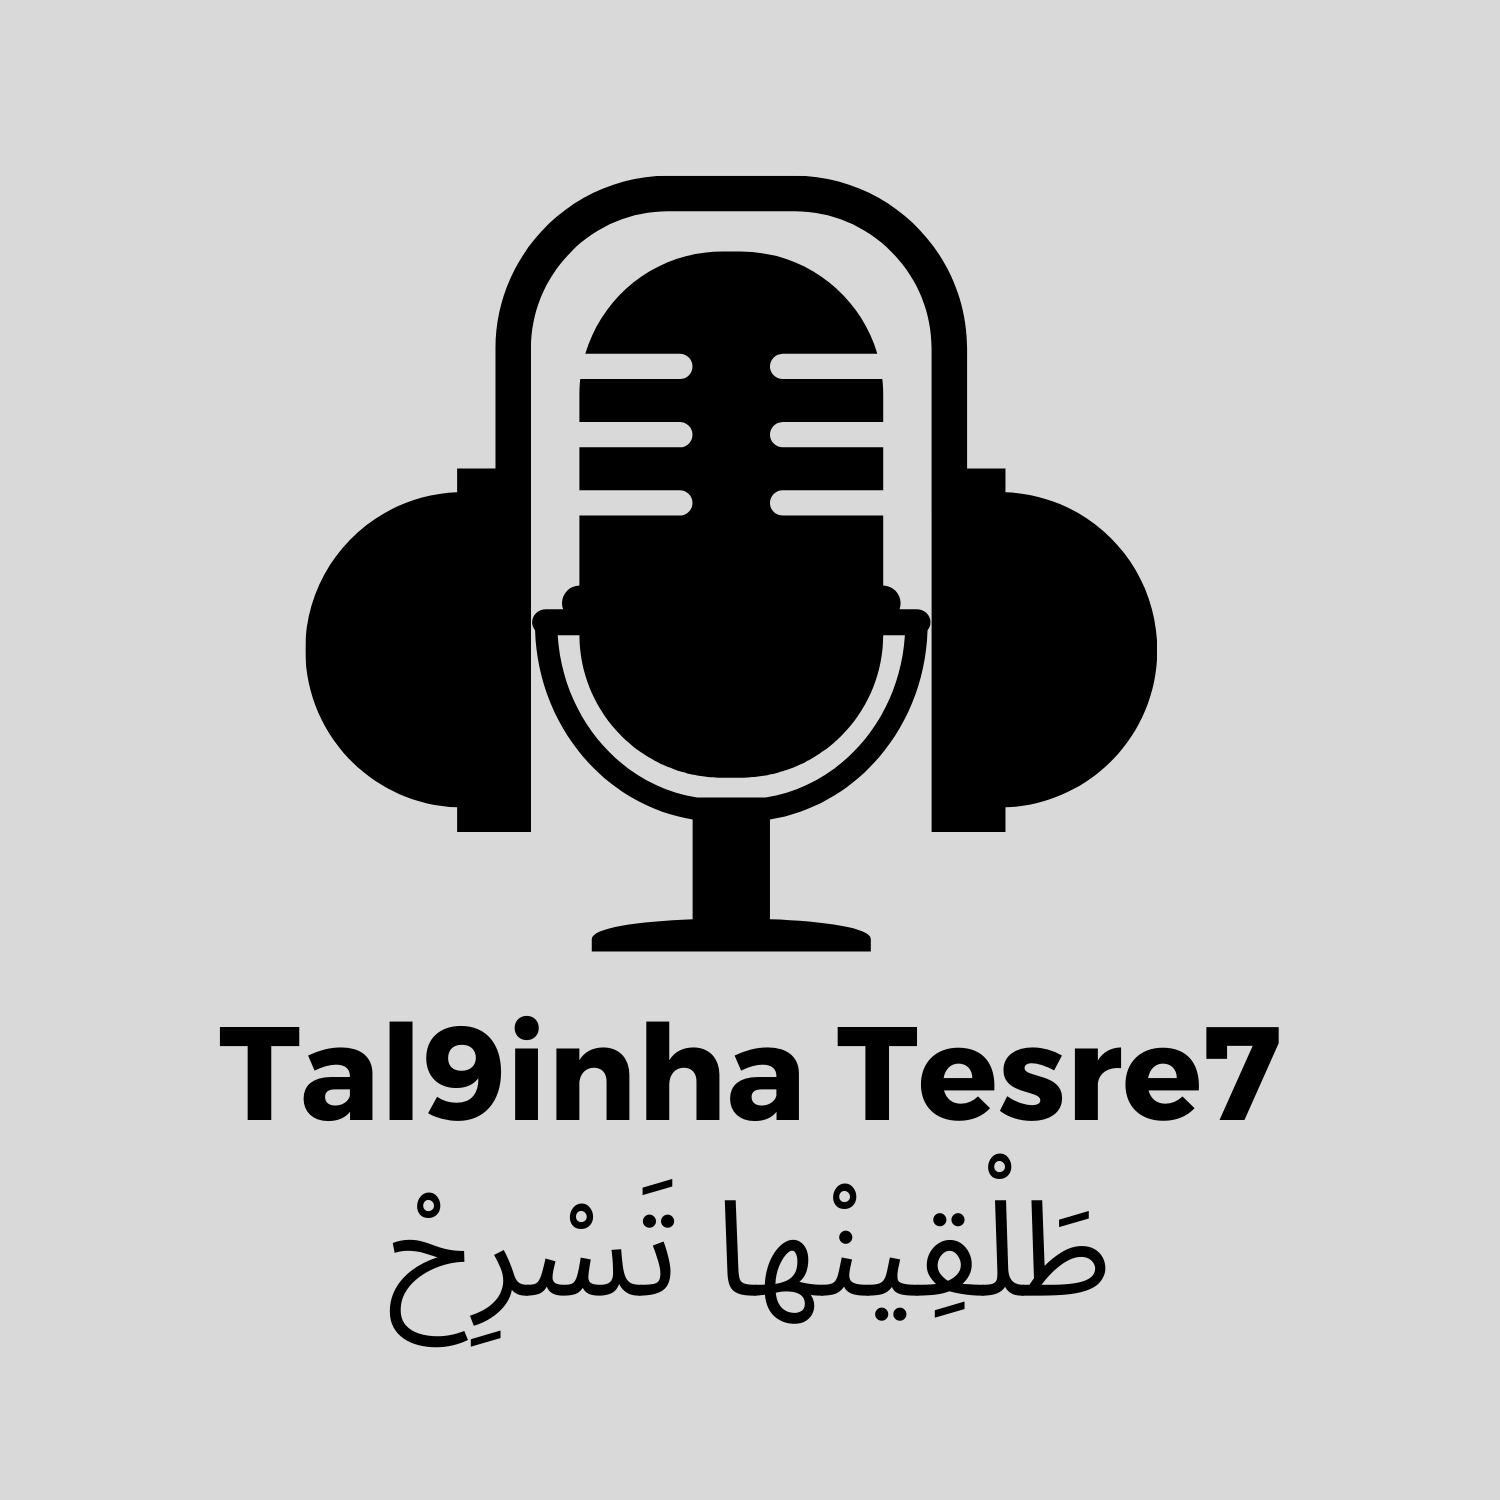 Tal9inha Tesre7 - طلقينها تسرح